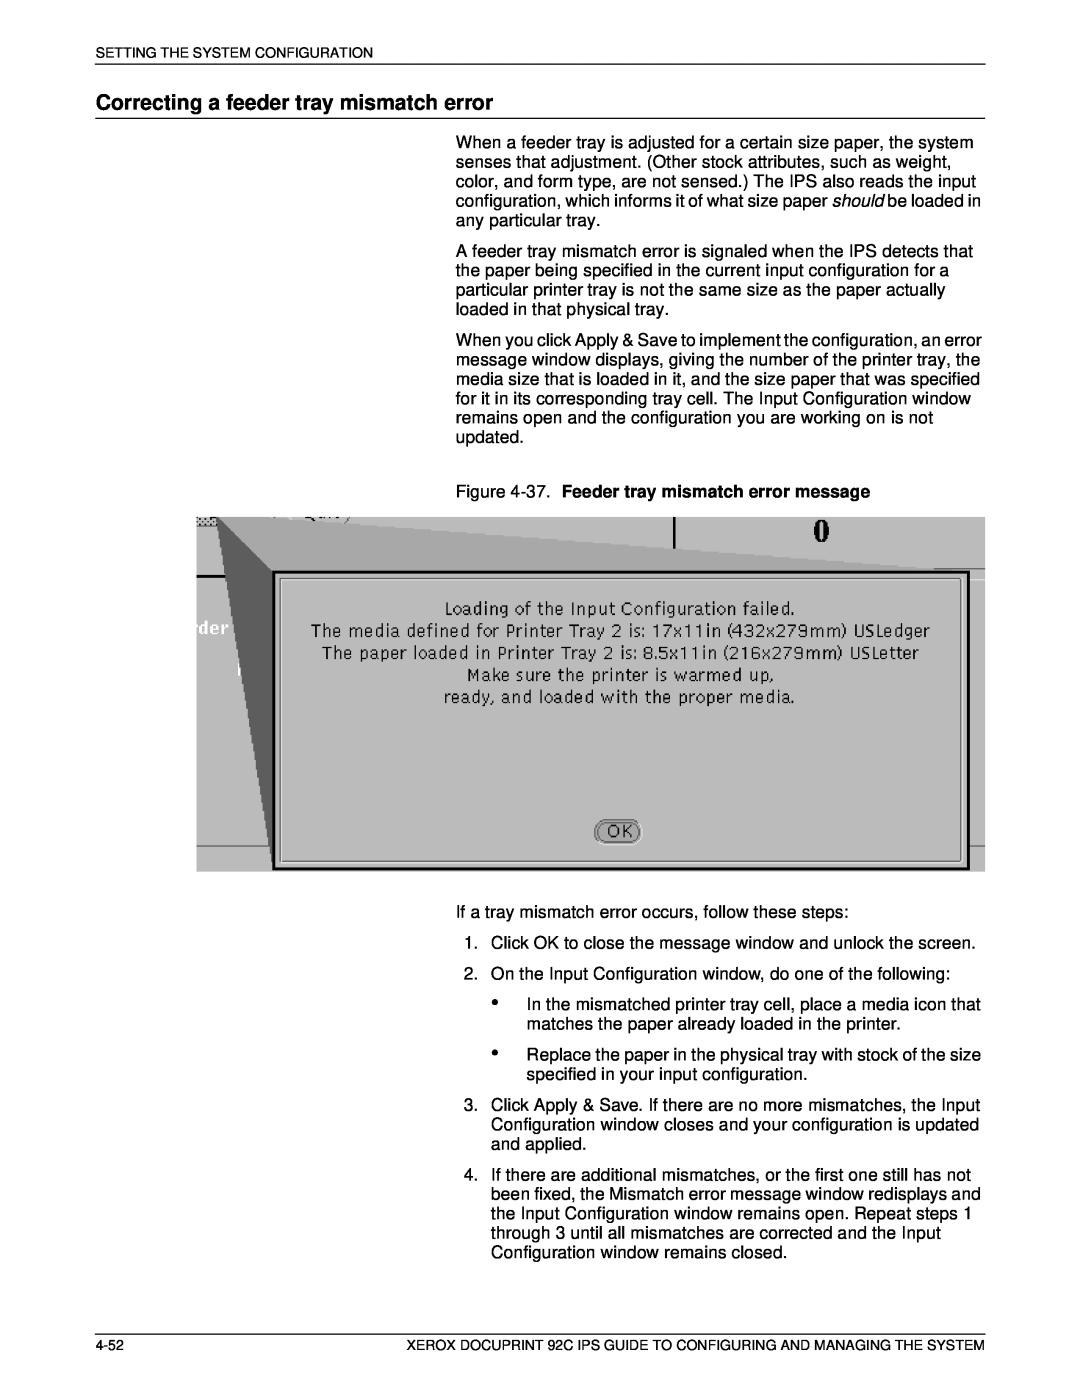 Xerox 92C IPS manual Correcting a feeder tray mismatch error, 37. Feeder tray mismatch error message 